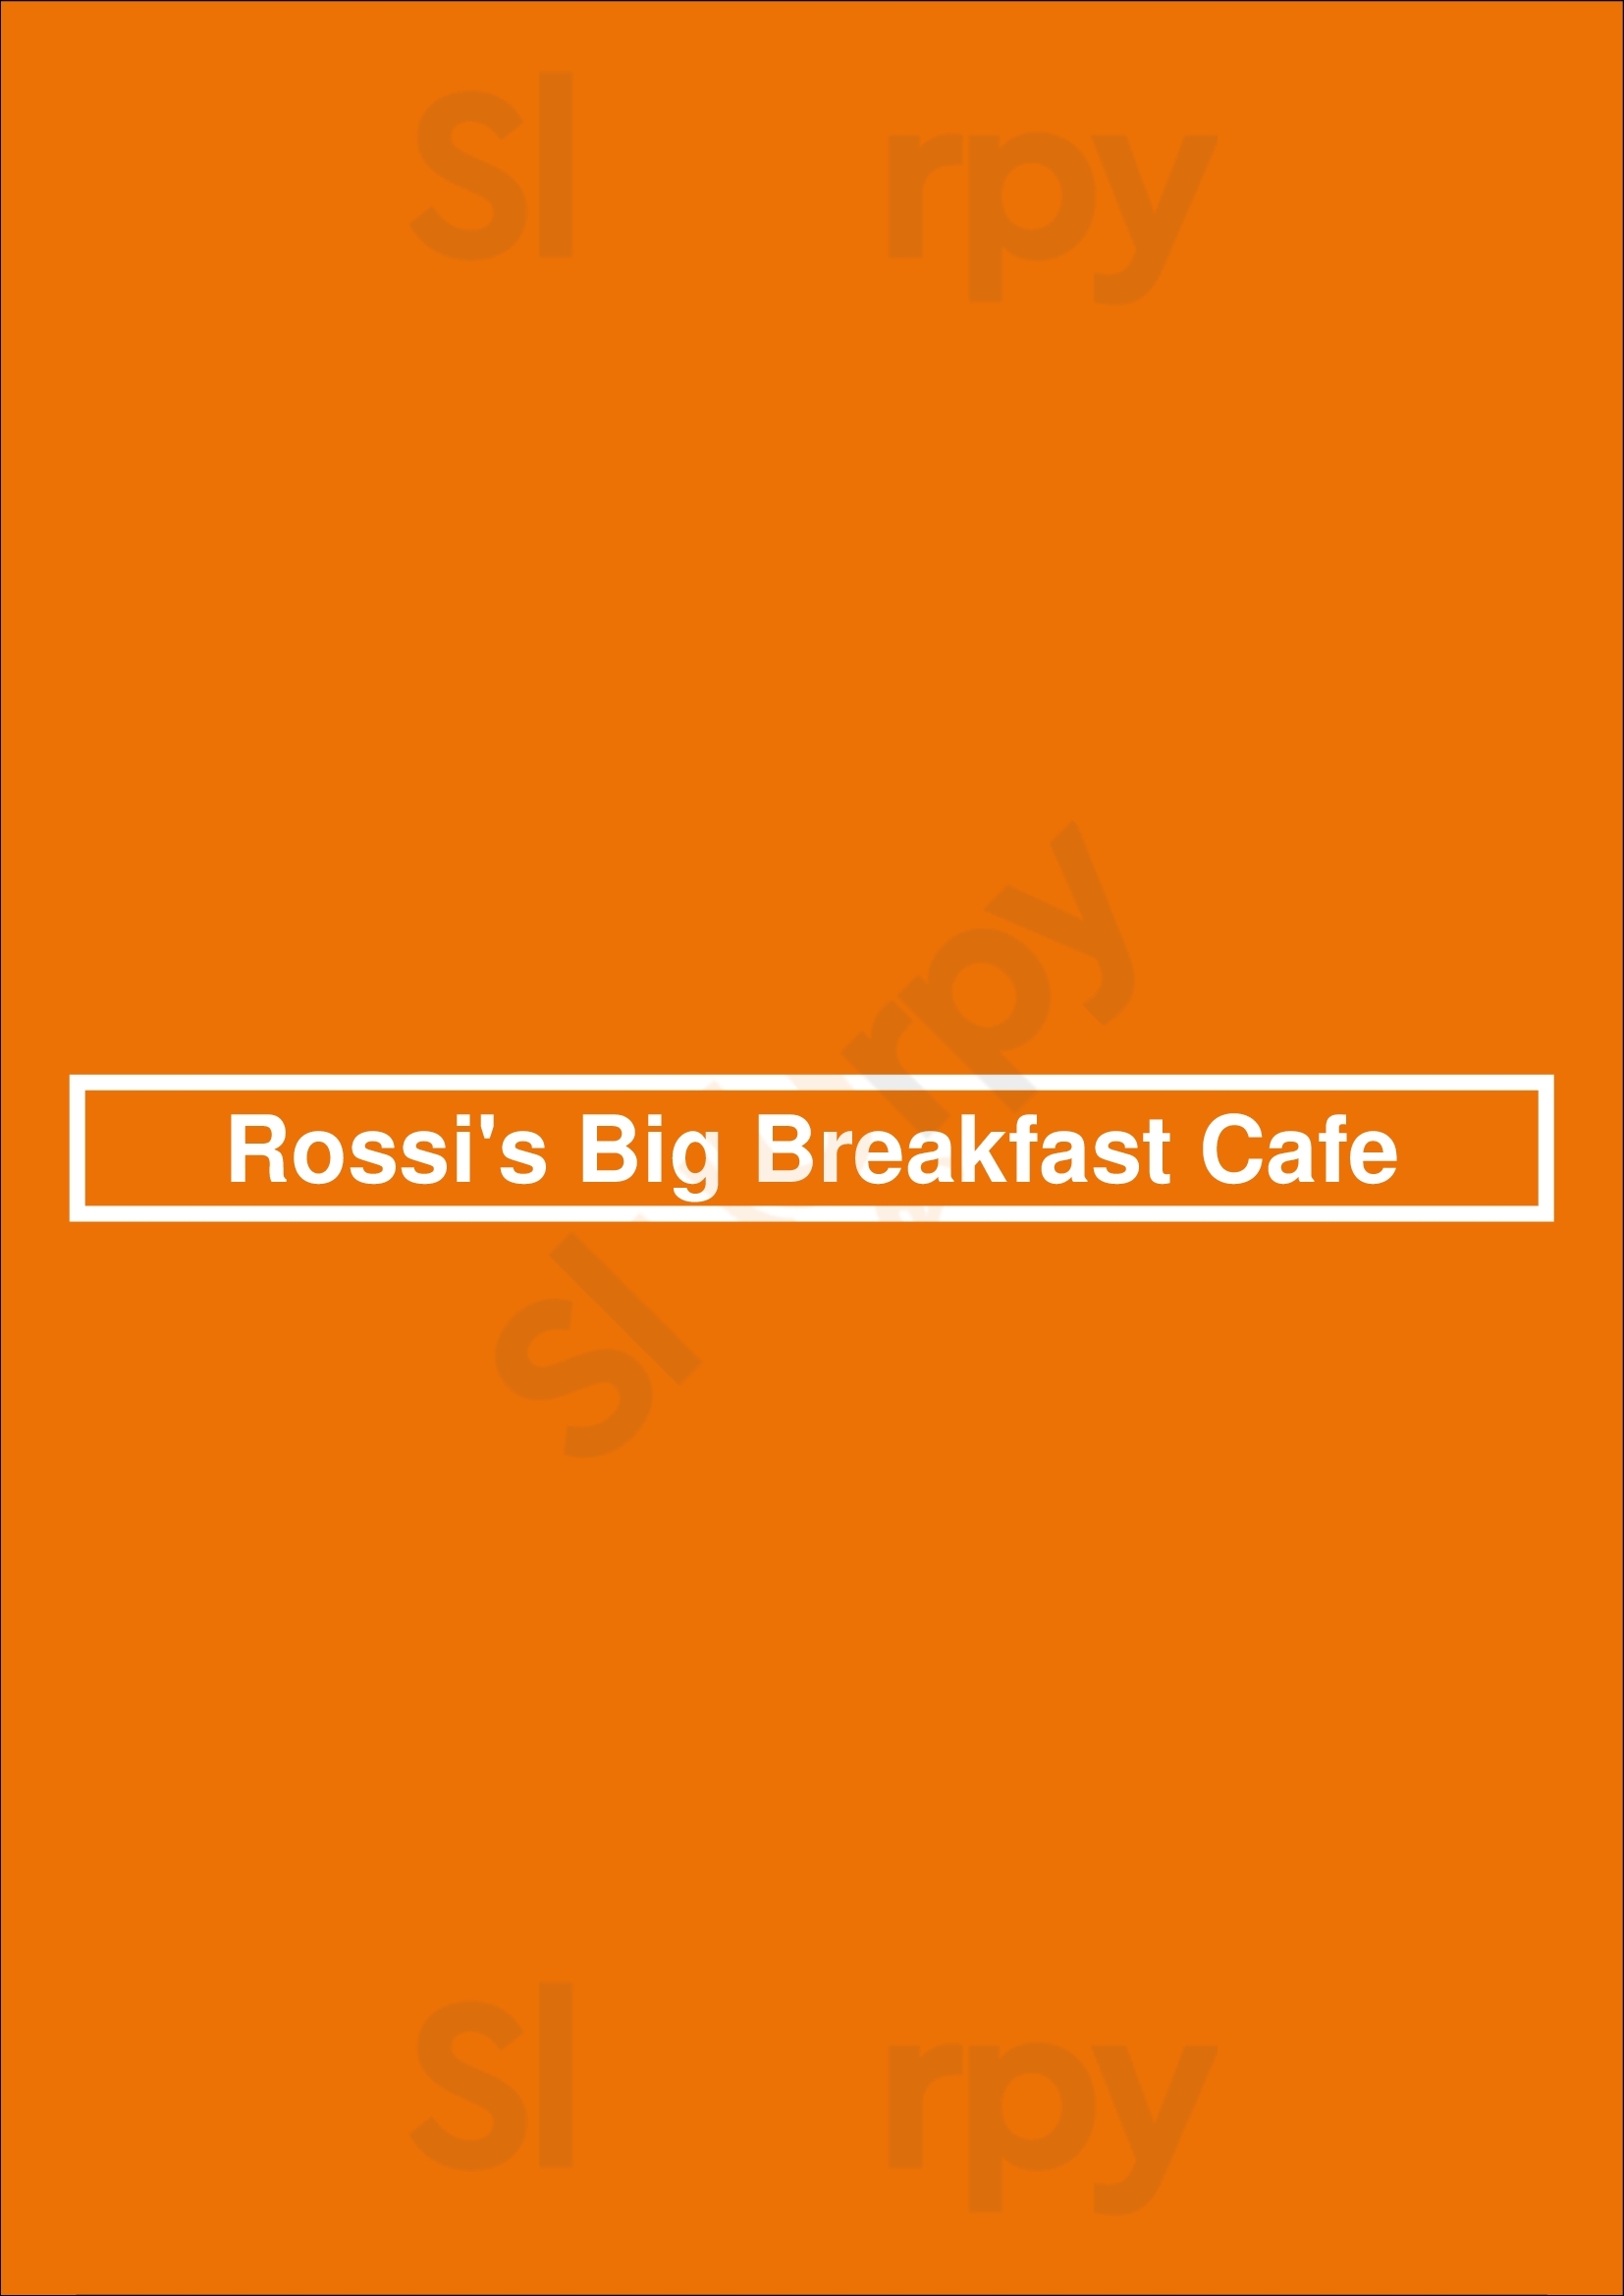 Rossi's Big Breakfast Cafe Coventry Menu - 1